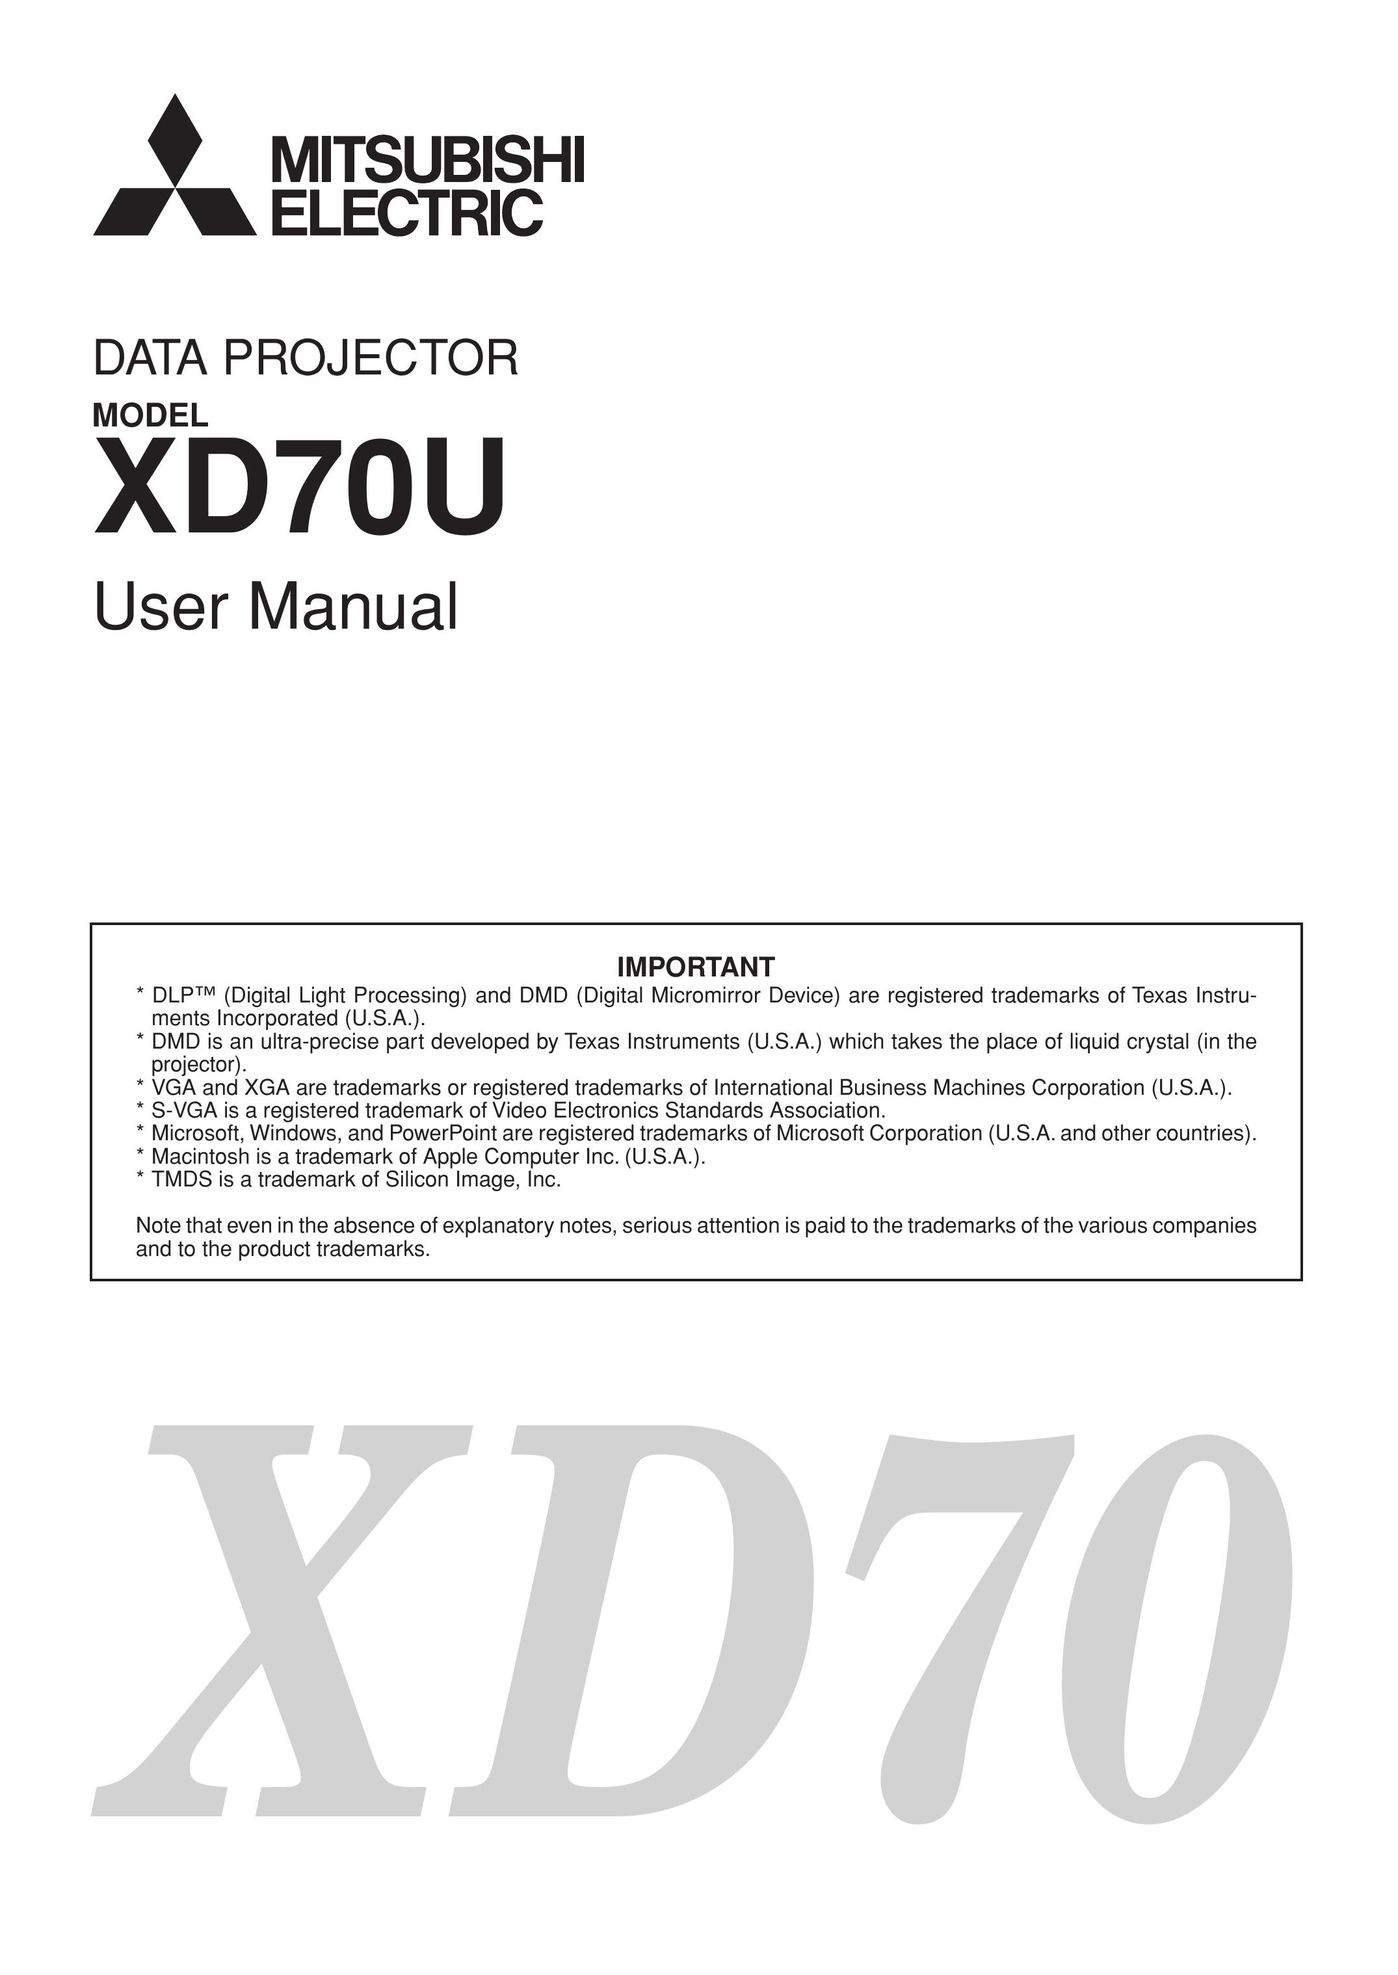 Mitsubishi Electronics DATA PROJECTOR Projector User Manual